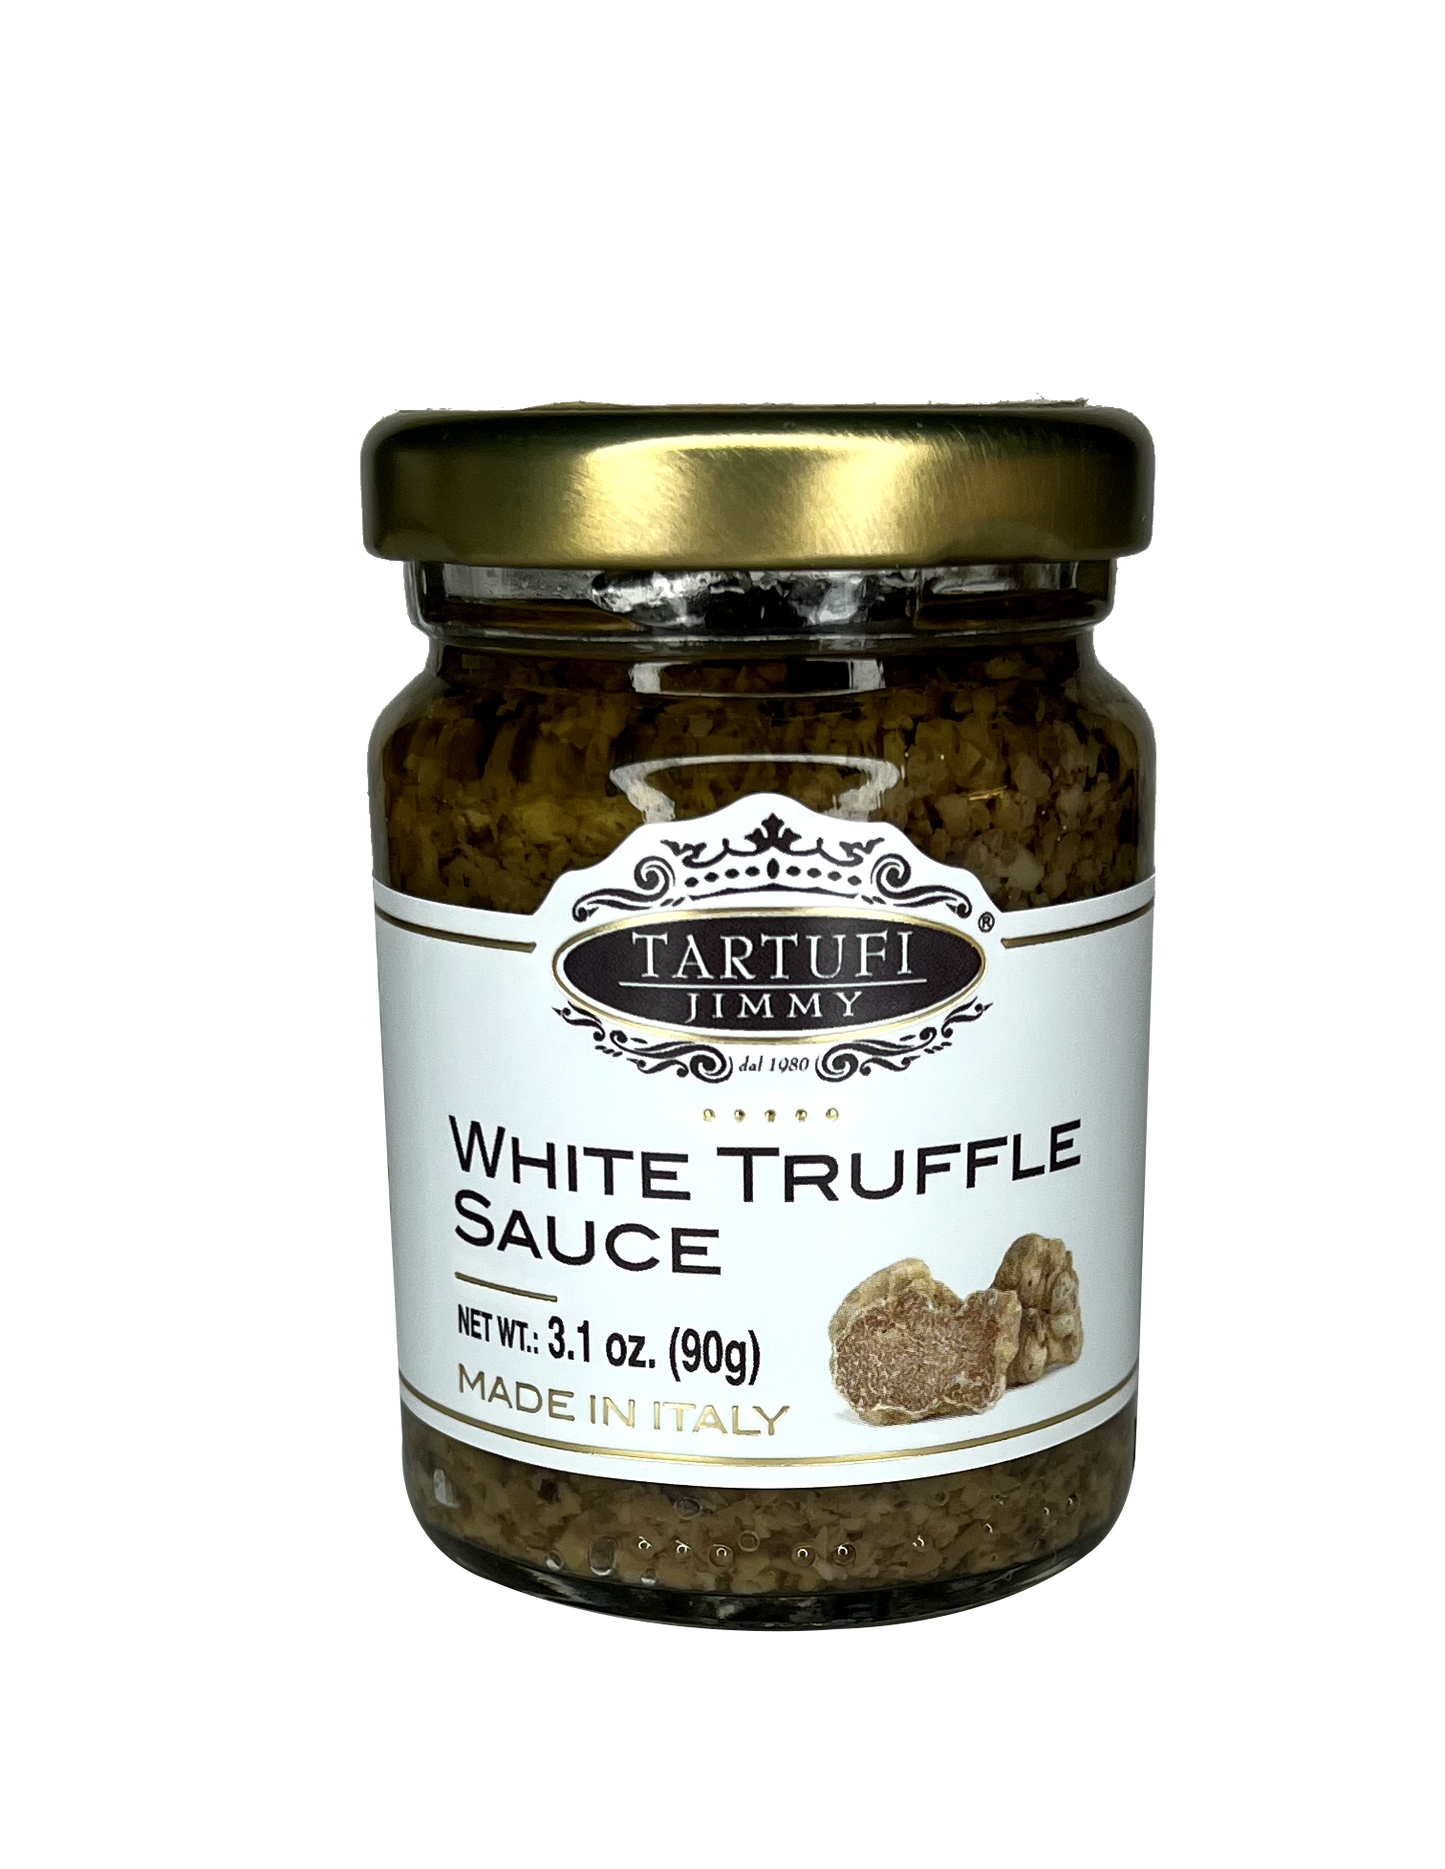 White truffle sauce Tartufi Jimmy